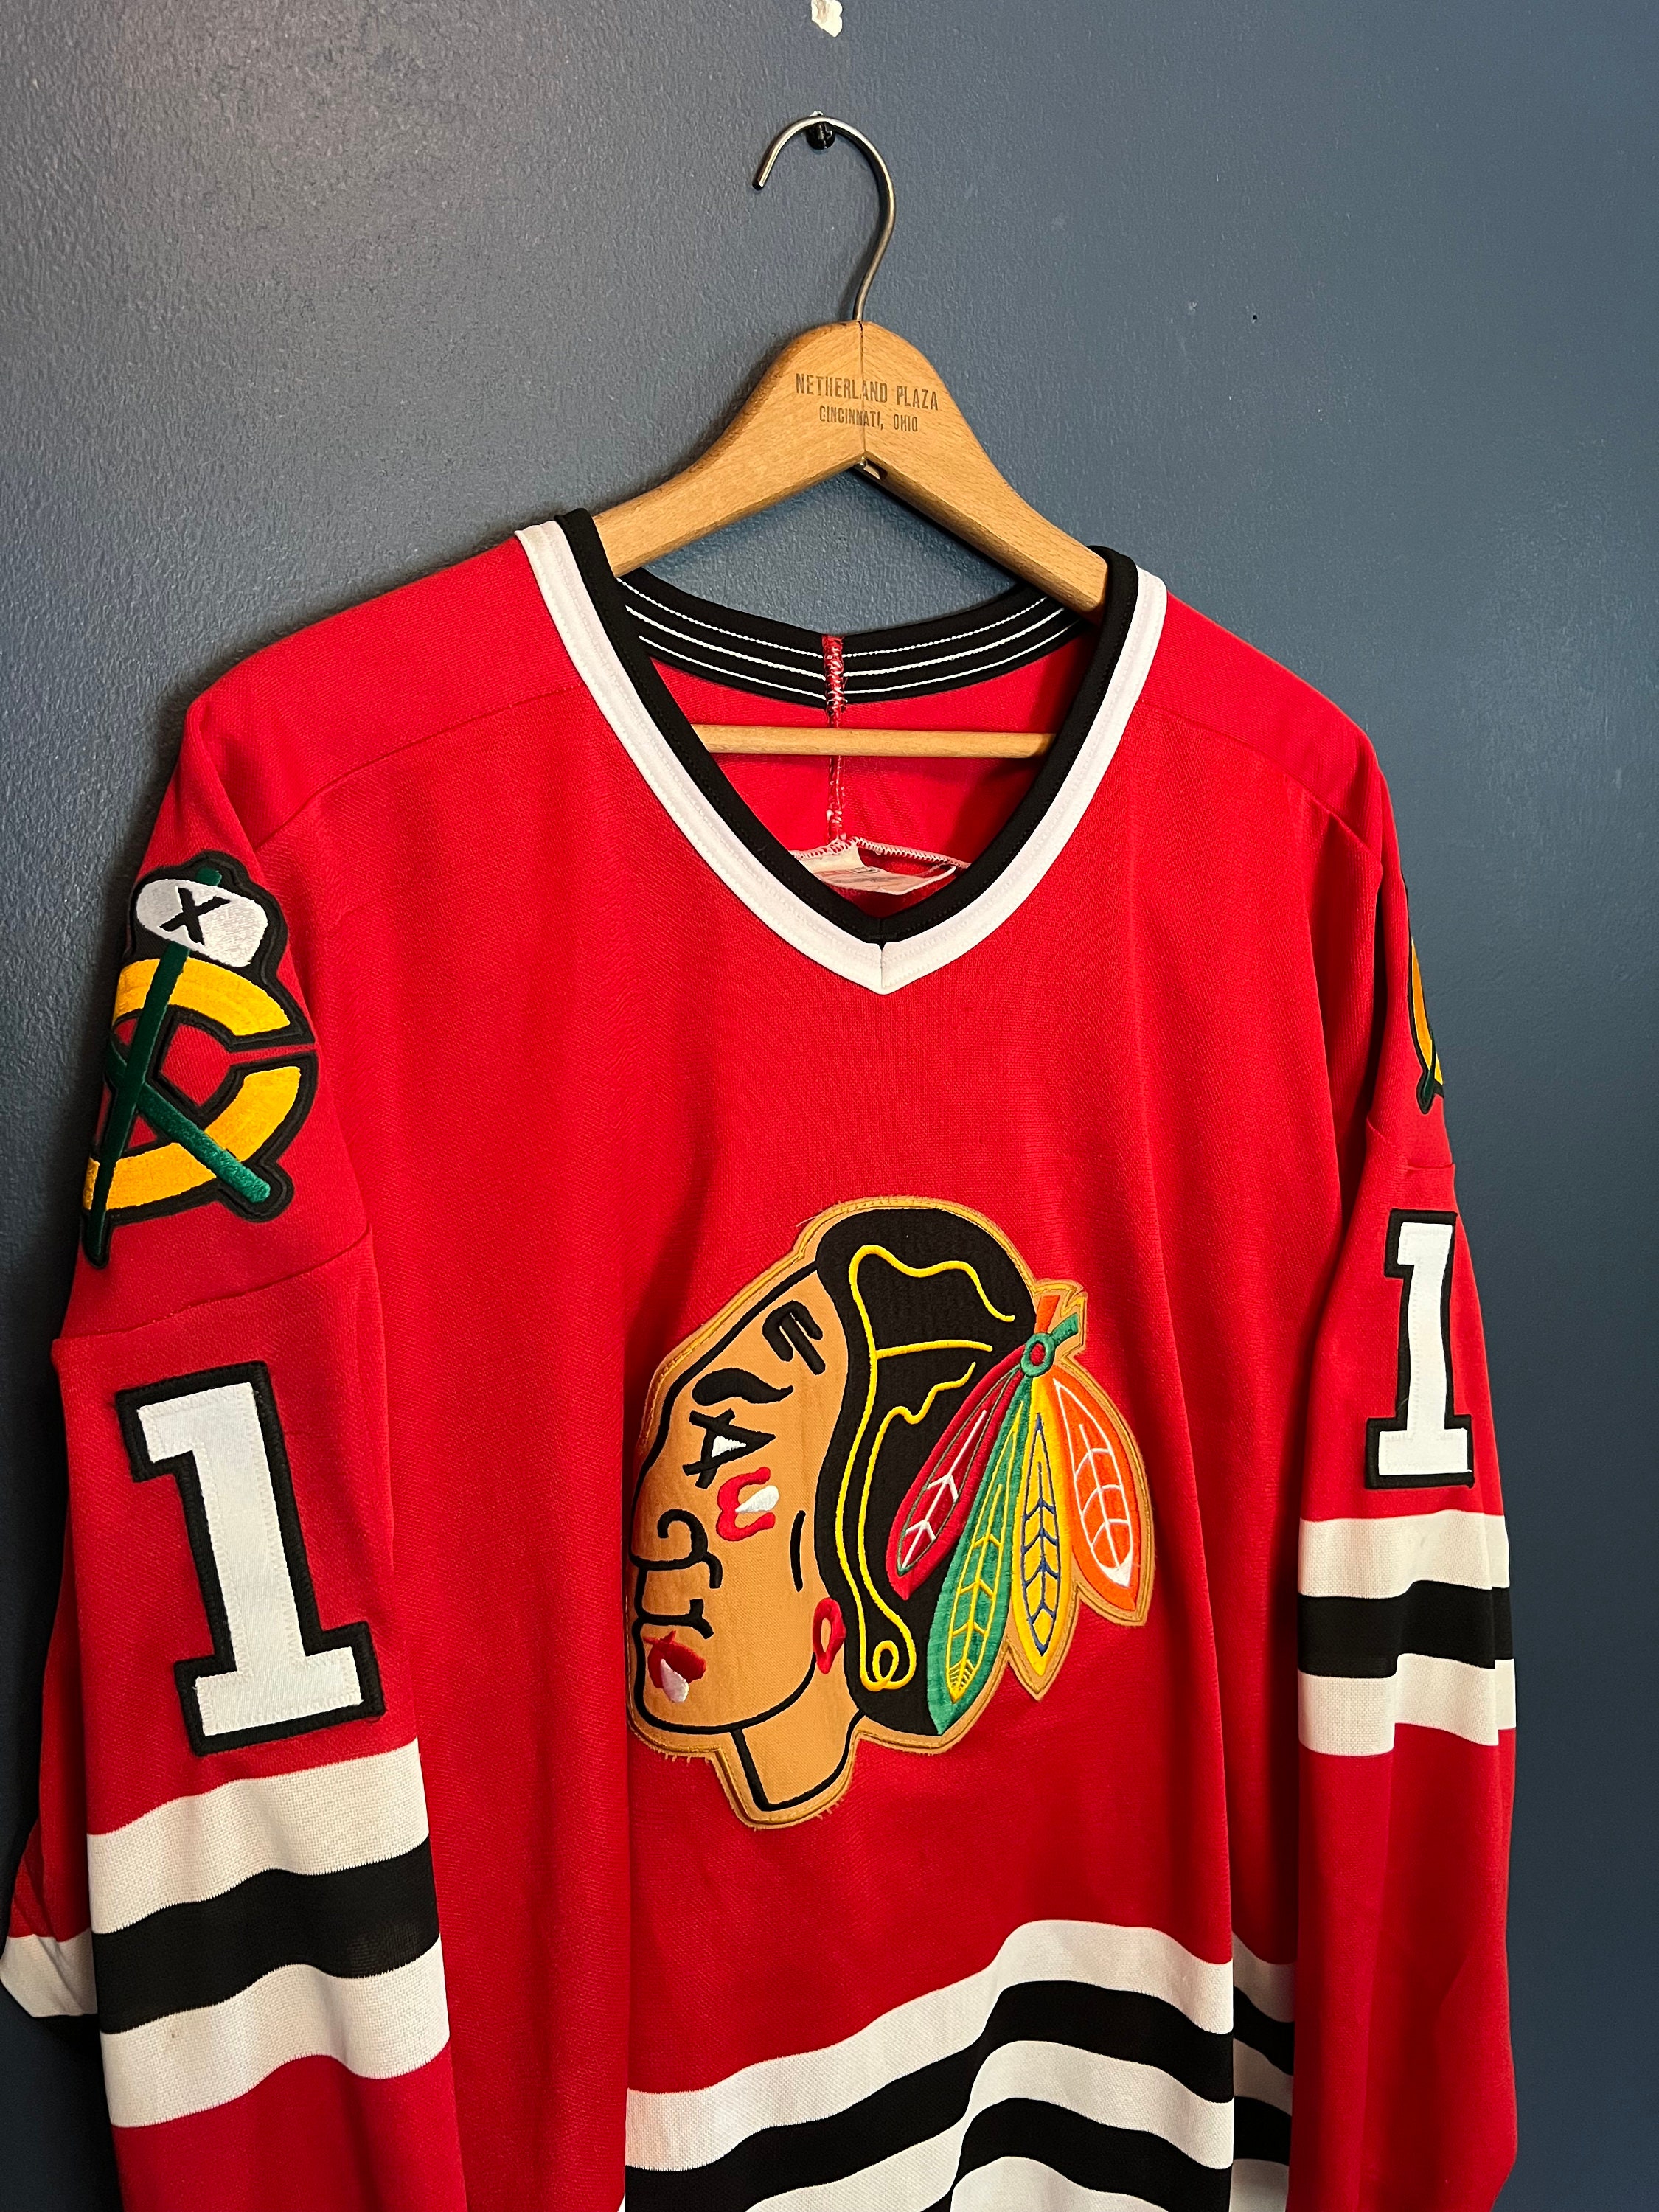  NHL Men's Chicago Blackhawks Retro Sport Jersey (Red, Medium)  : Sports Fan Jerseys : Sports & Outdoors